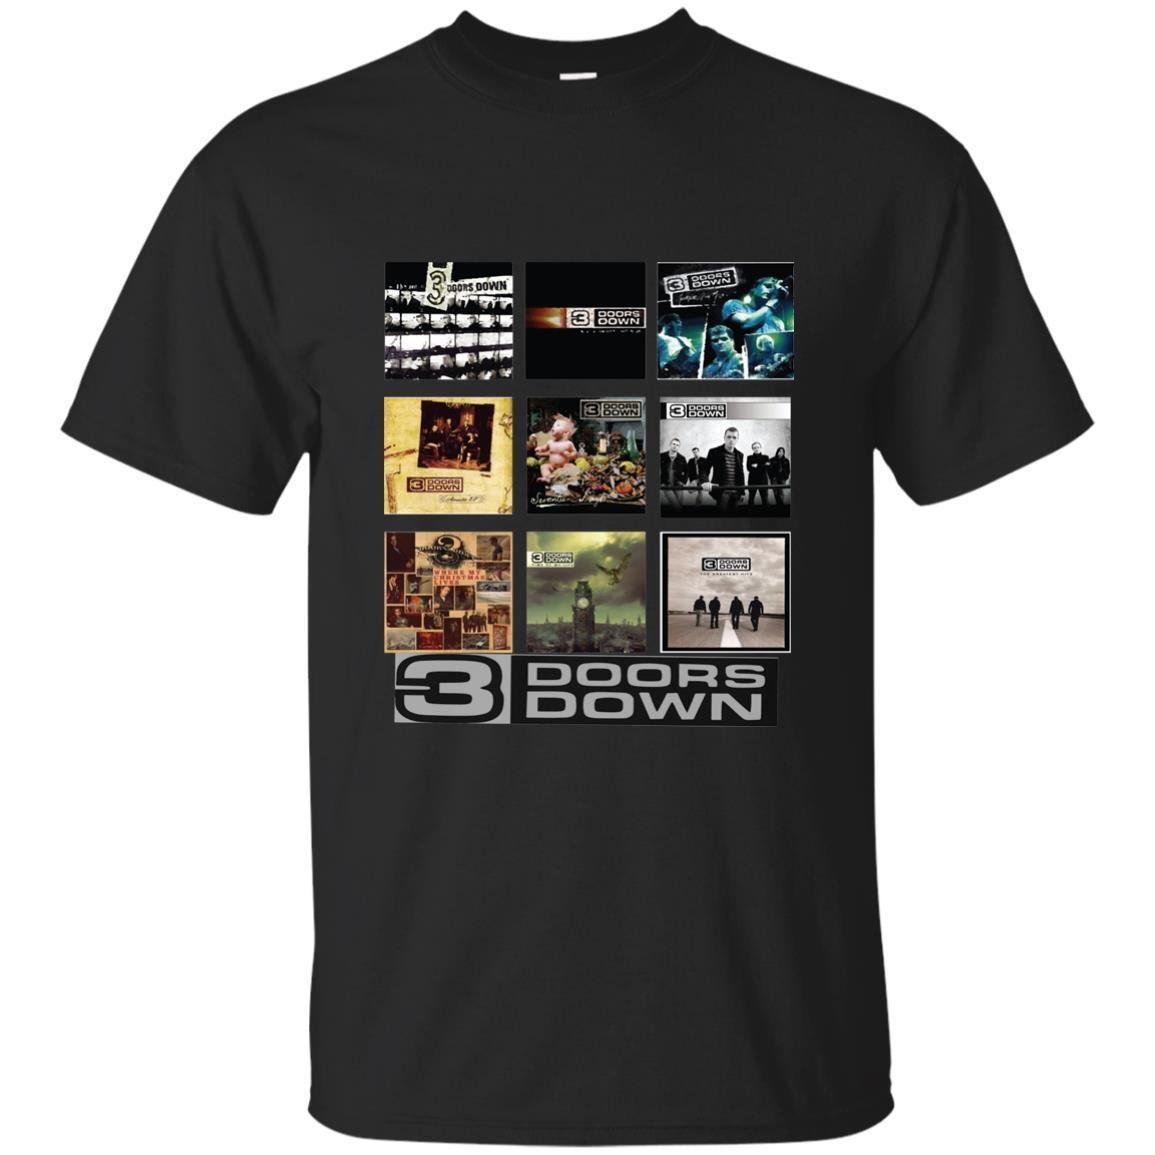 NEW 3 Doors Down Rock Band BLACK T Shirt Super Fast Shipping